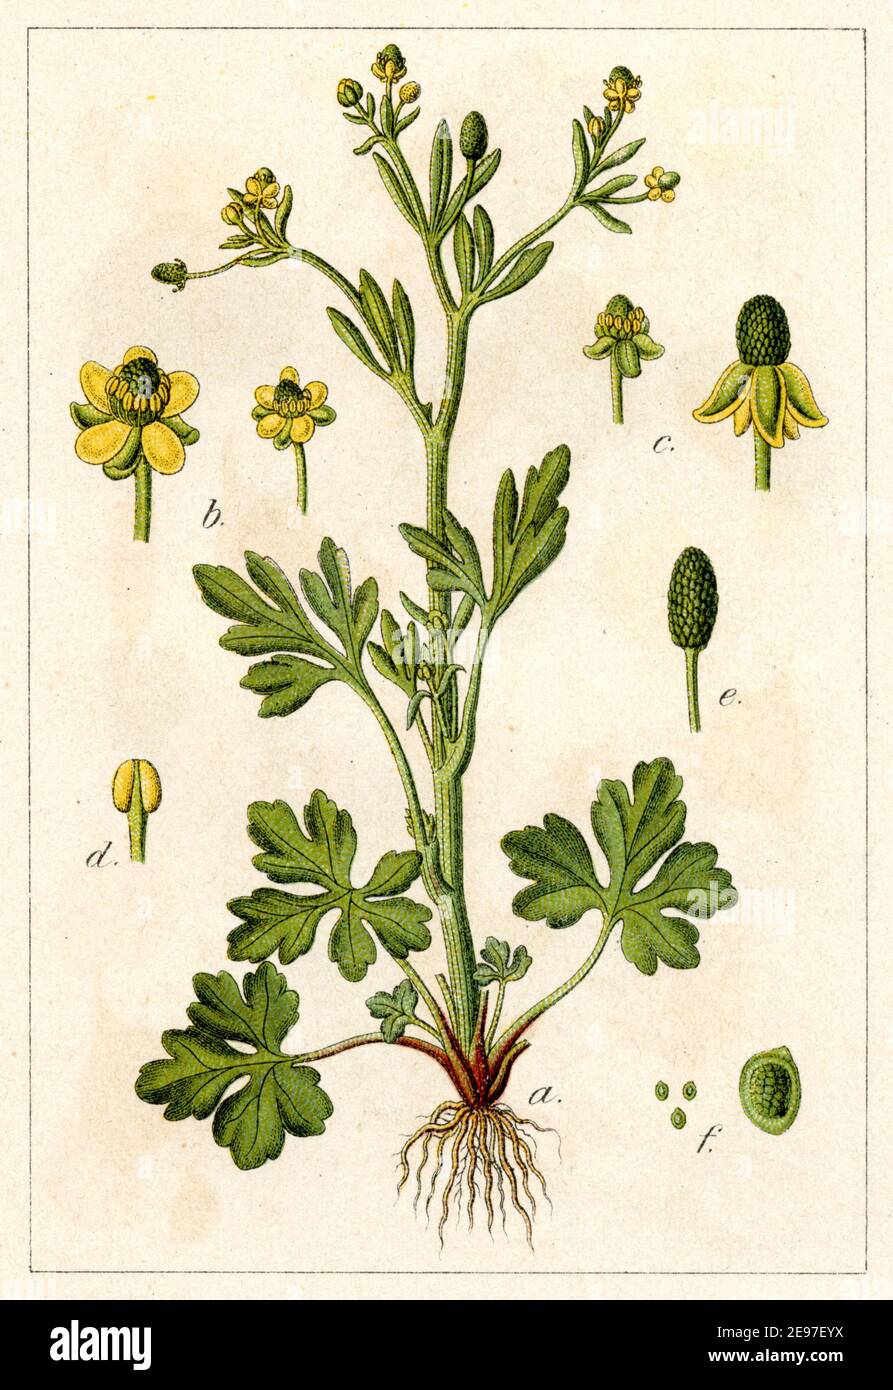 celery-leaved buttercup / Ranunculus sceleratus / Hahnenfuß, Gift-  / botany book, 1901) Stock Photo